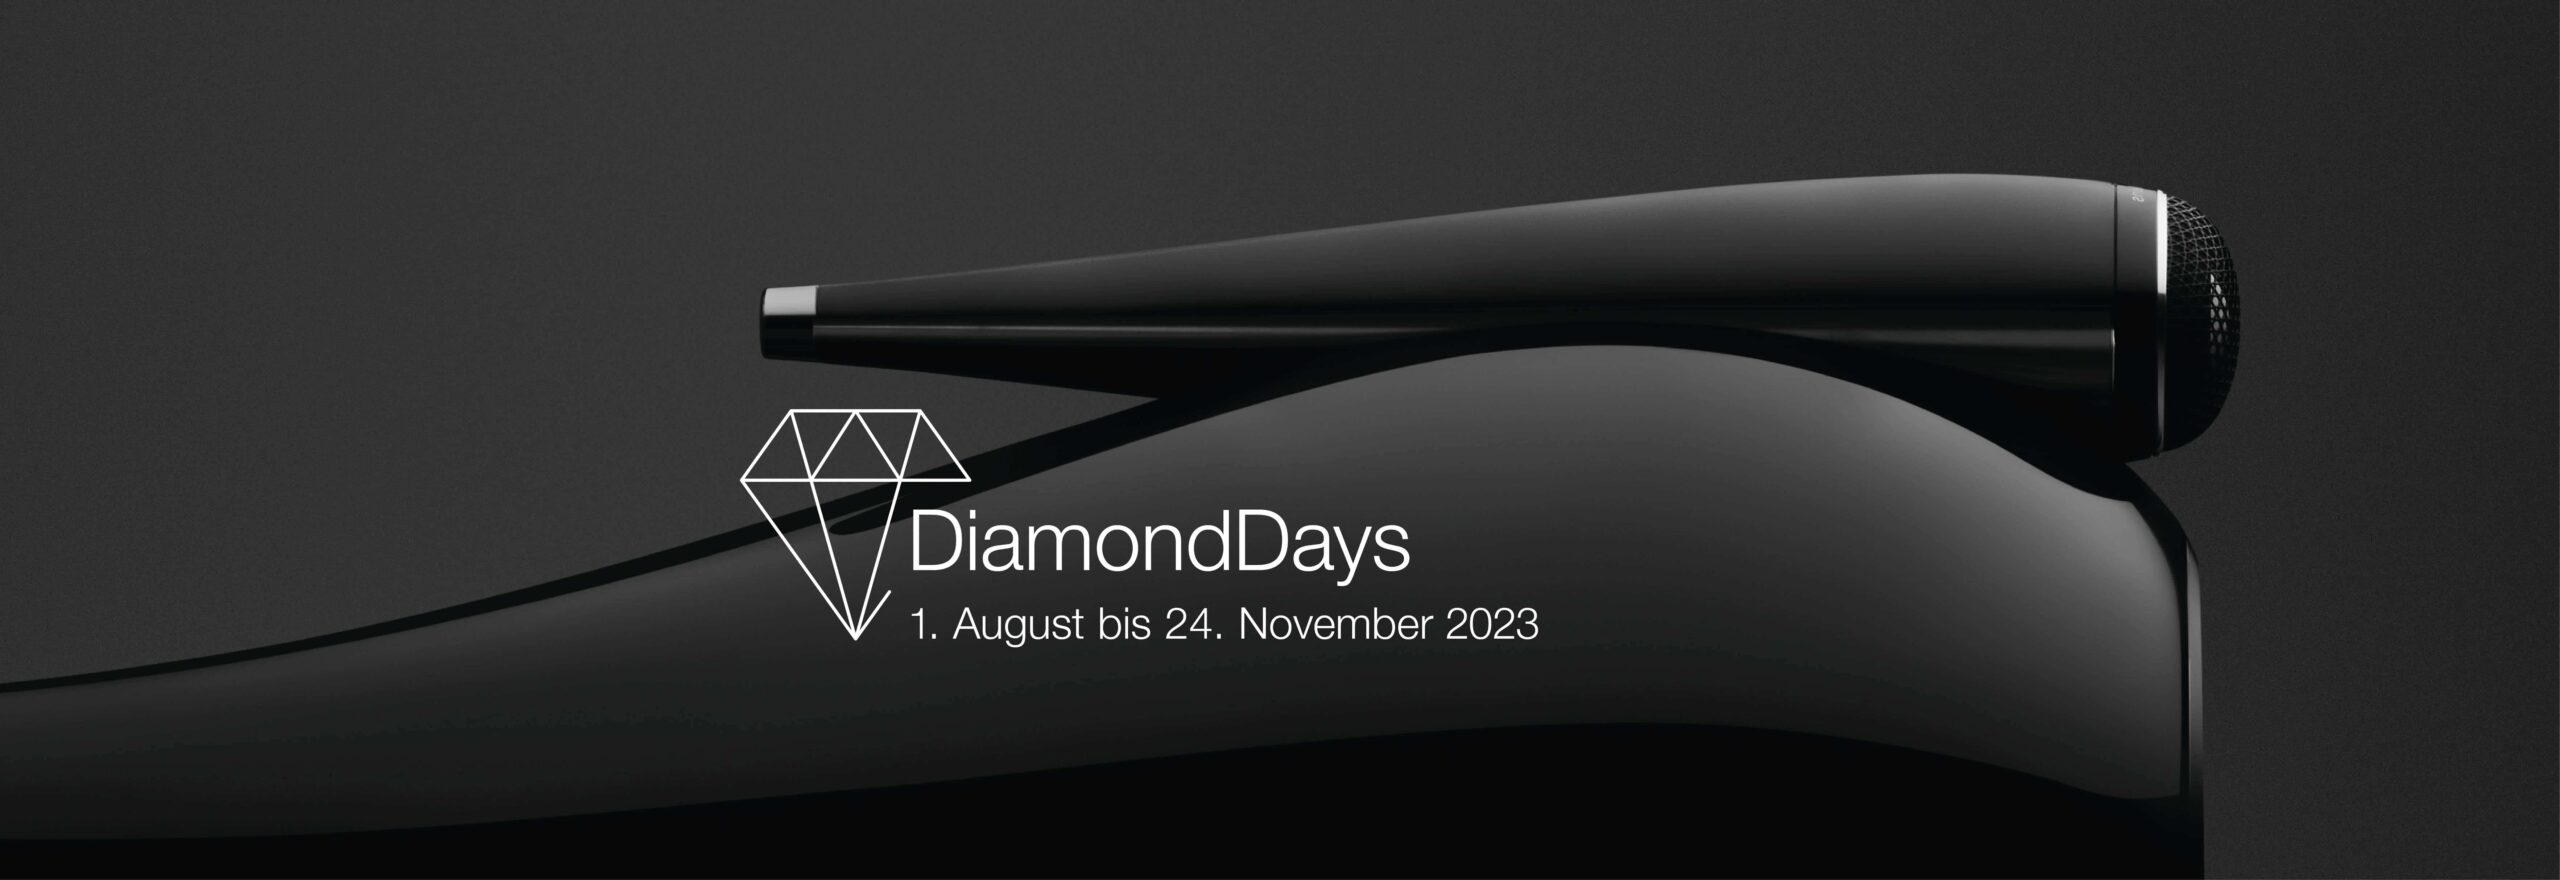 Diamond Days 2023 - Banner